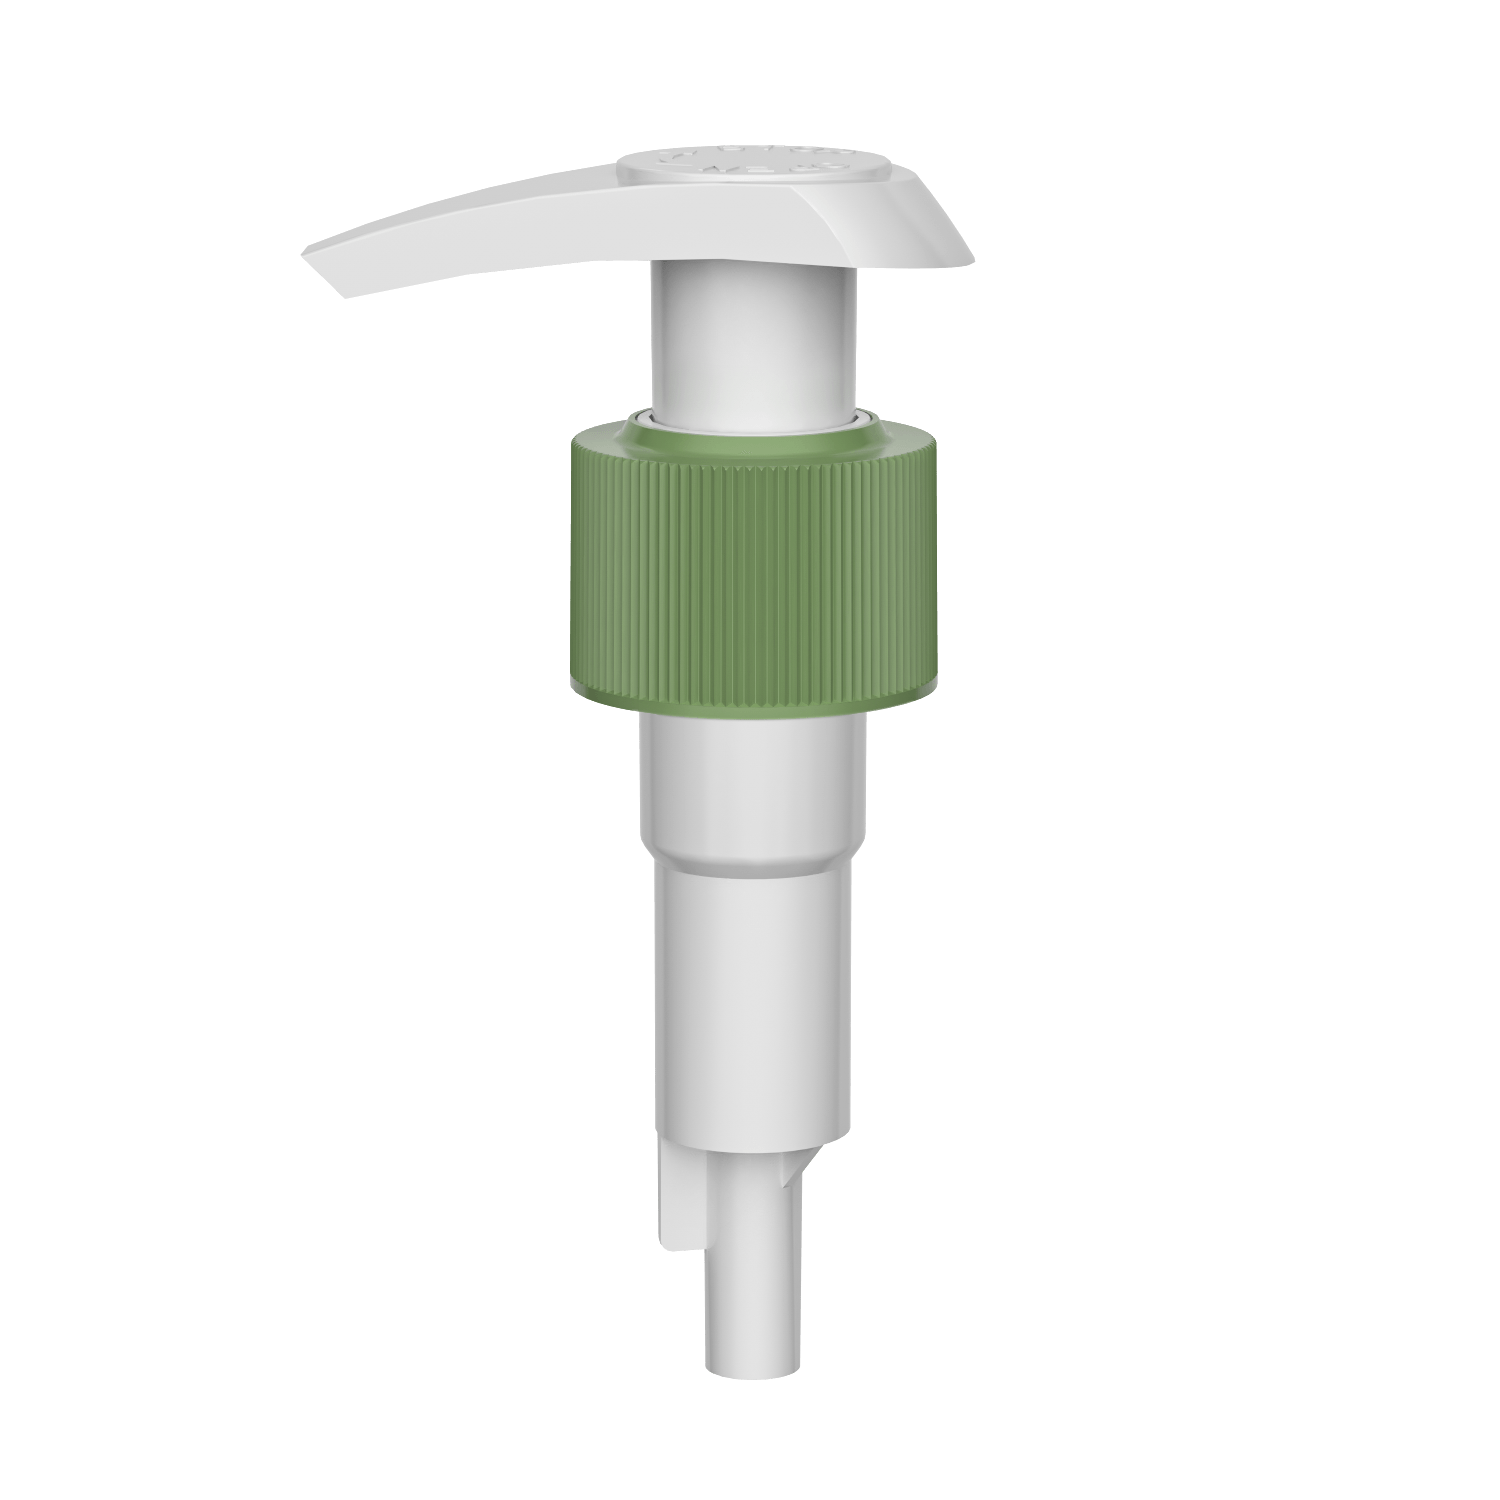 HD-601B 24/410 external outside spring liquid soap dispenser 1.9-2.1CC lotion pump